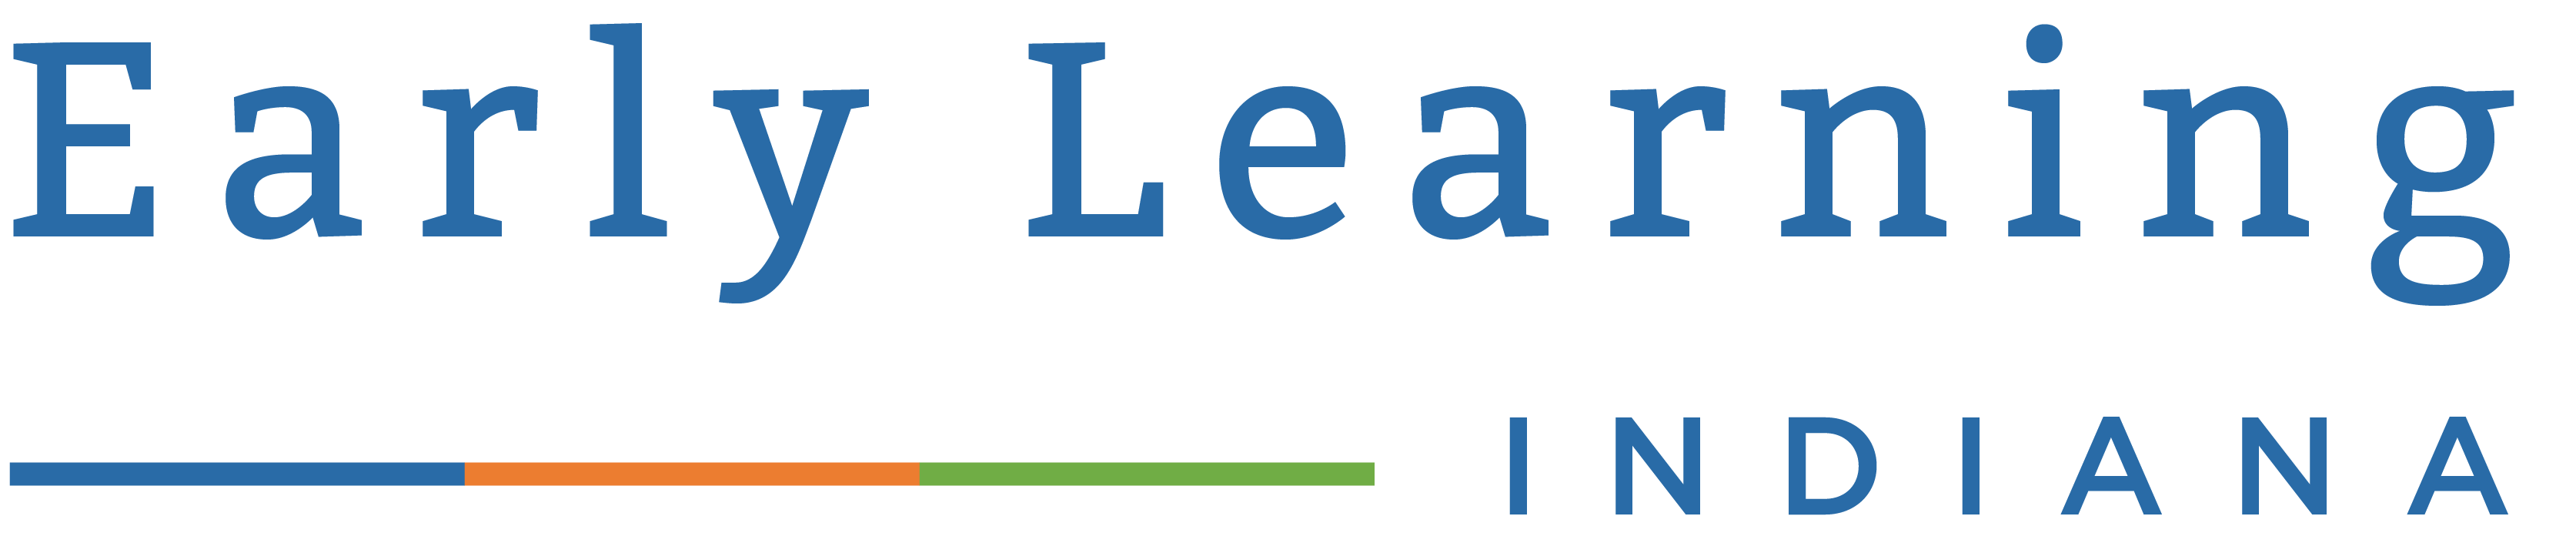 Early Learning Indiana's Logo